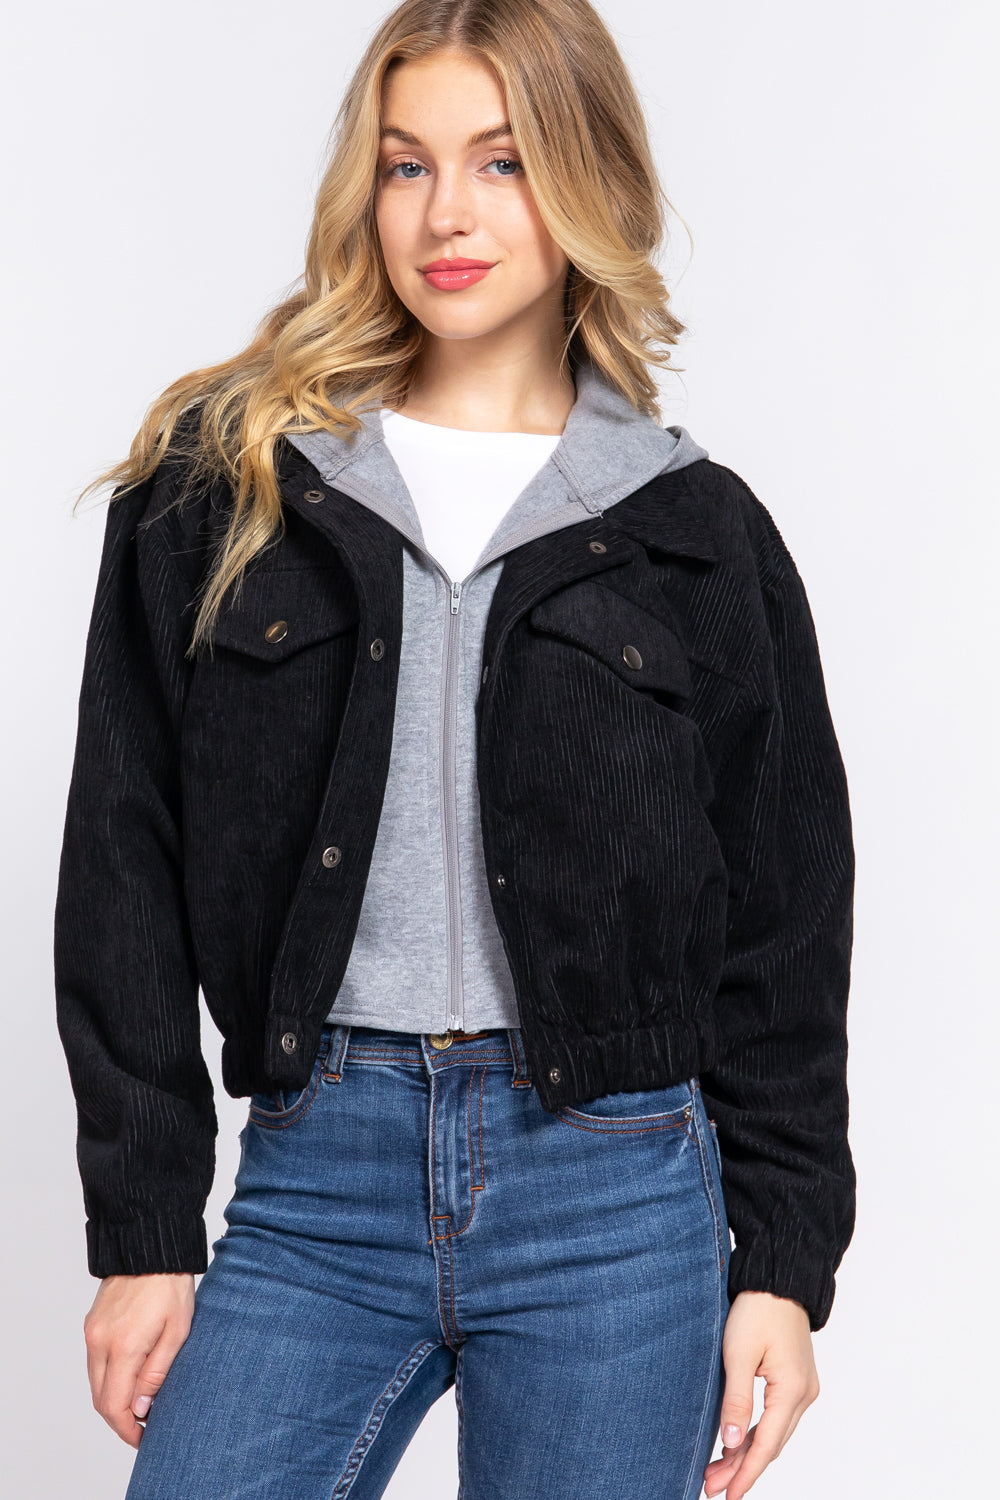 Black - Long Slv Hooded Corduroy Jacket - 5 colors - womens jacket at TFC&H Co.